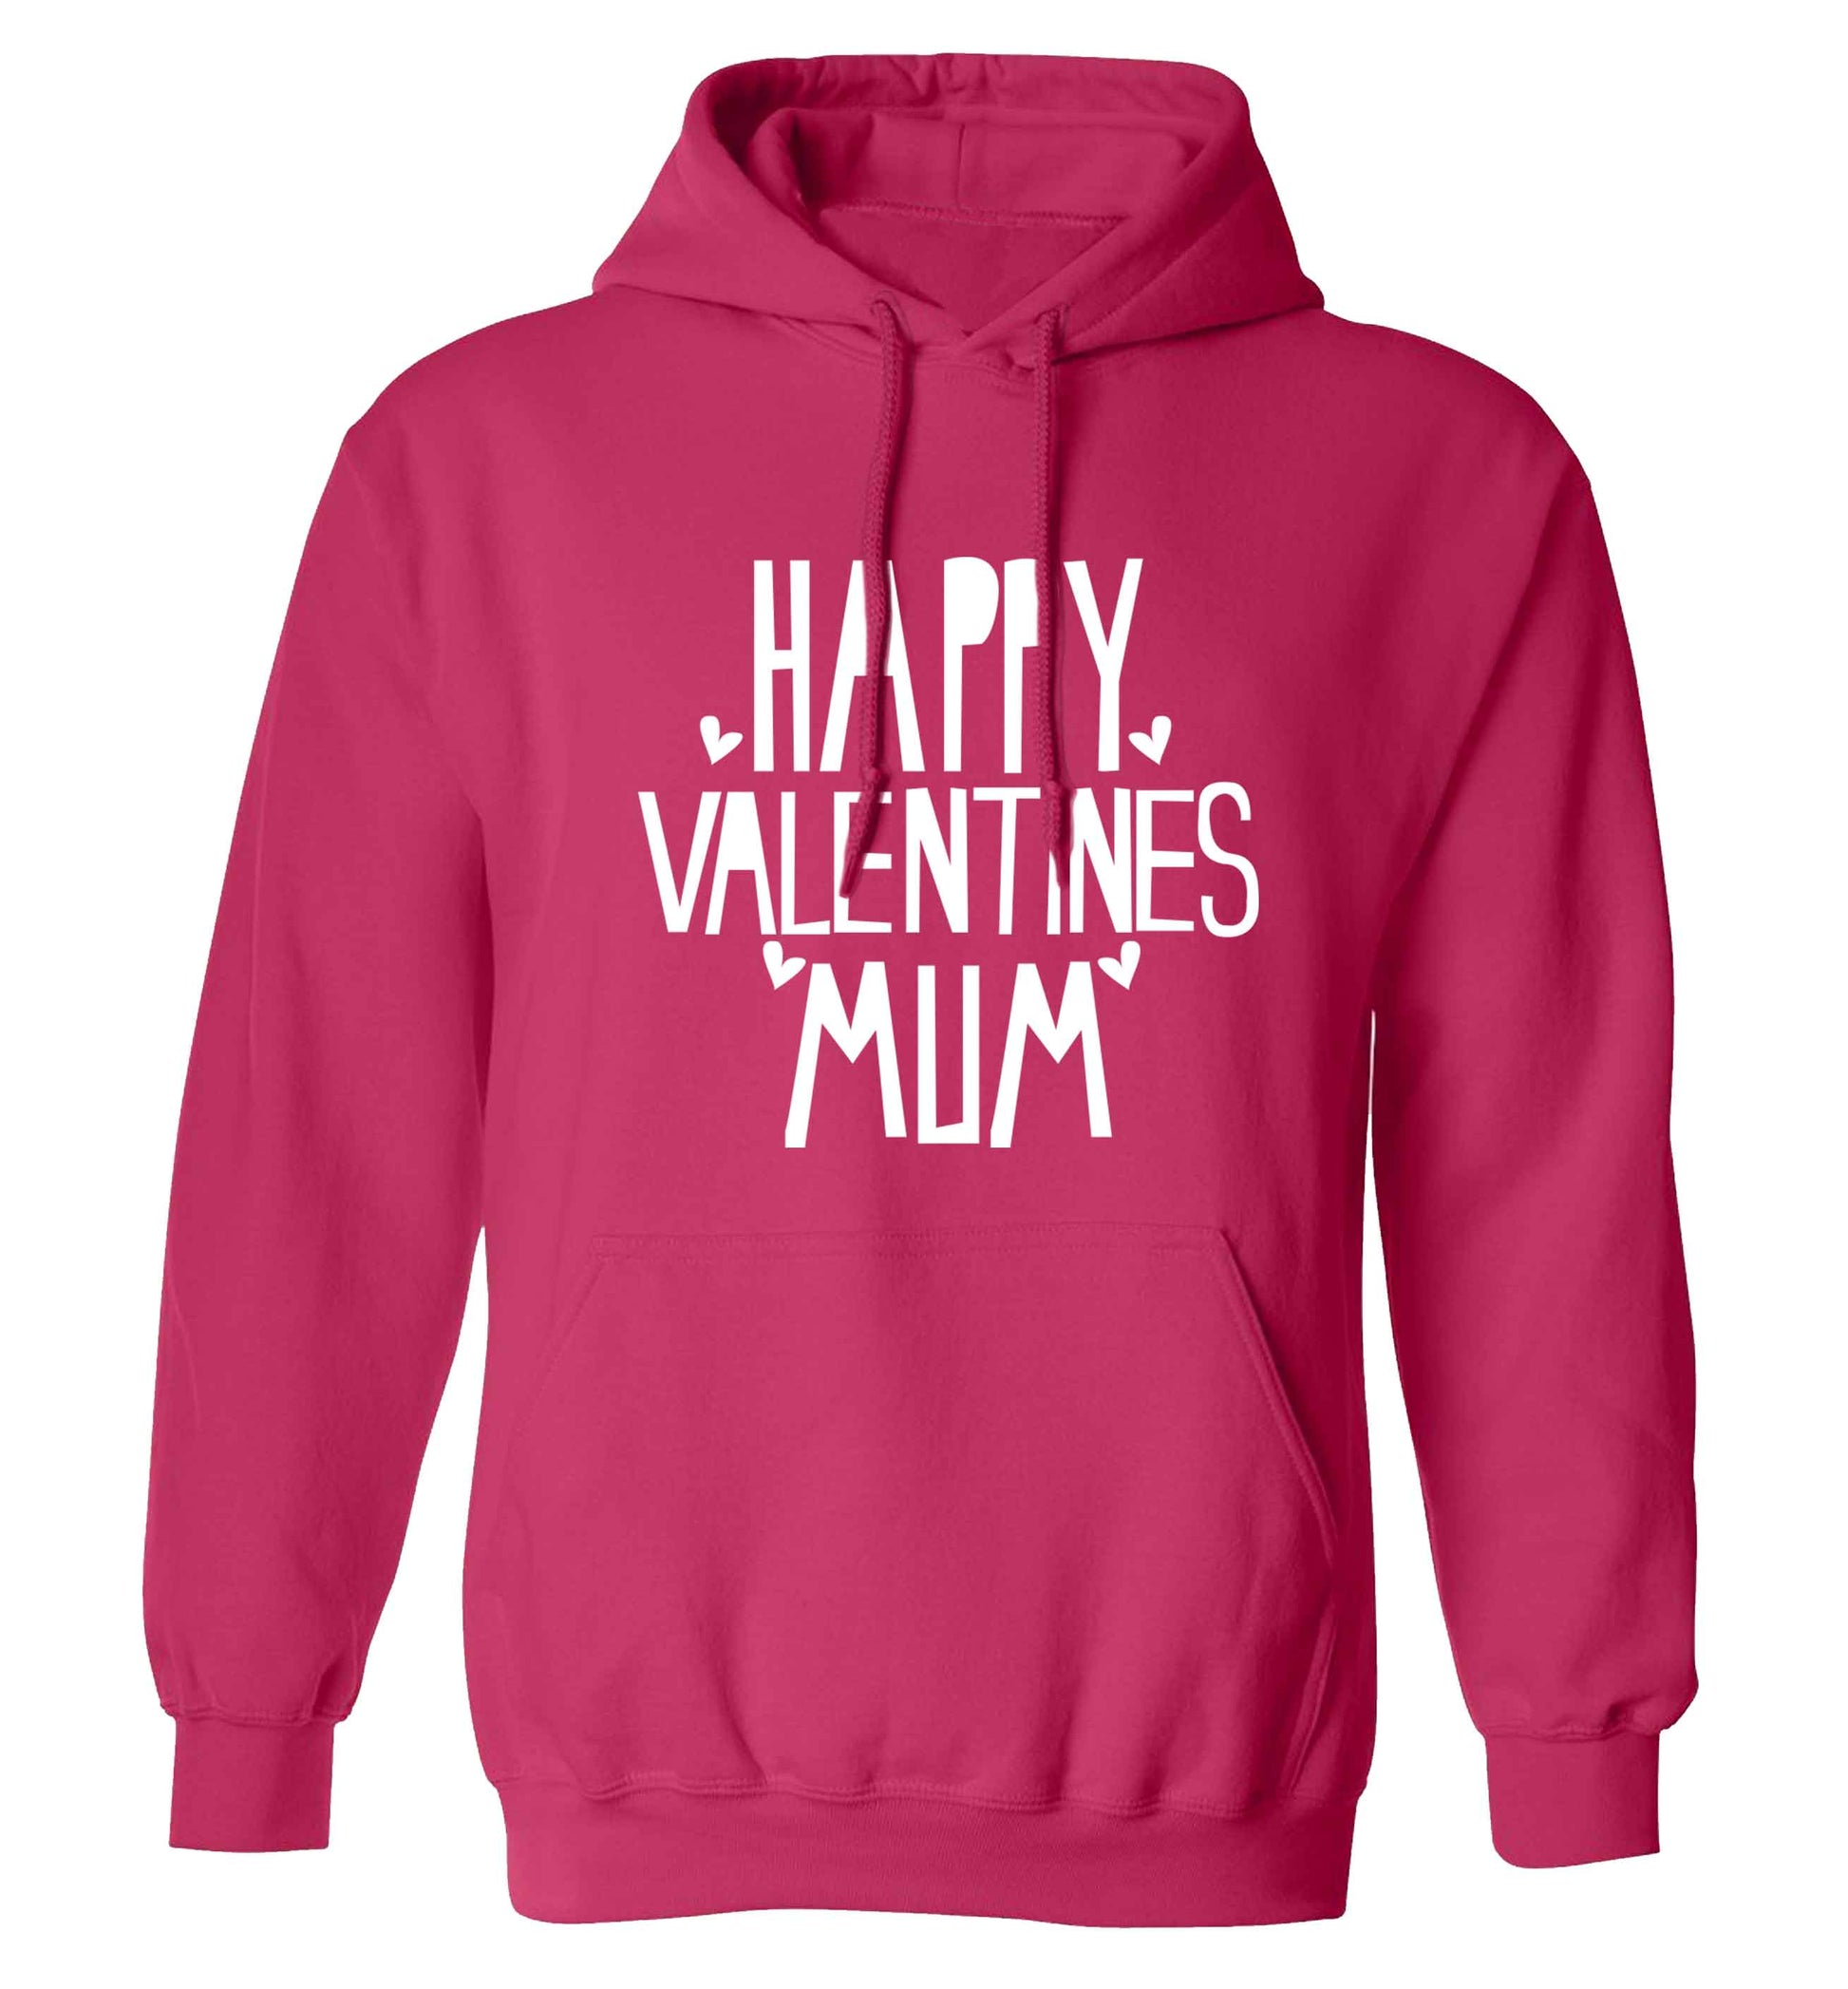 Happy valentines mum adults unisex pink hoodie 2XL